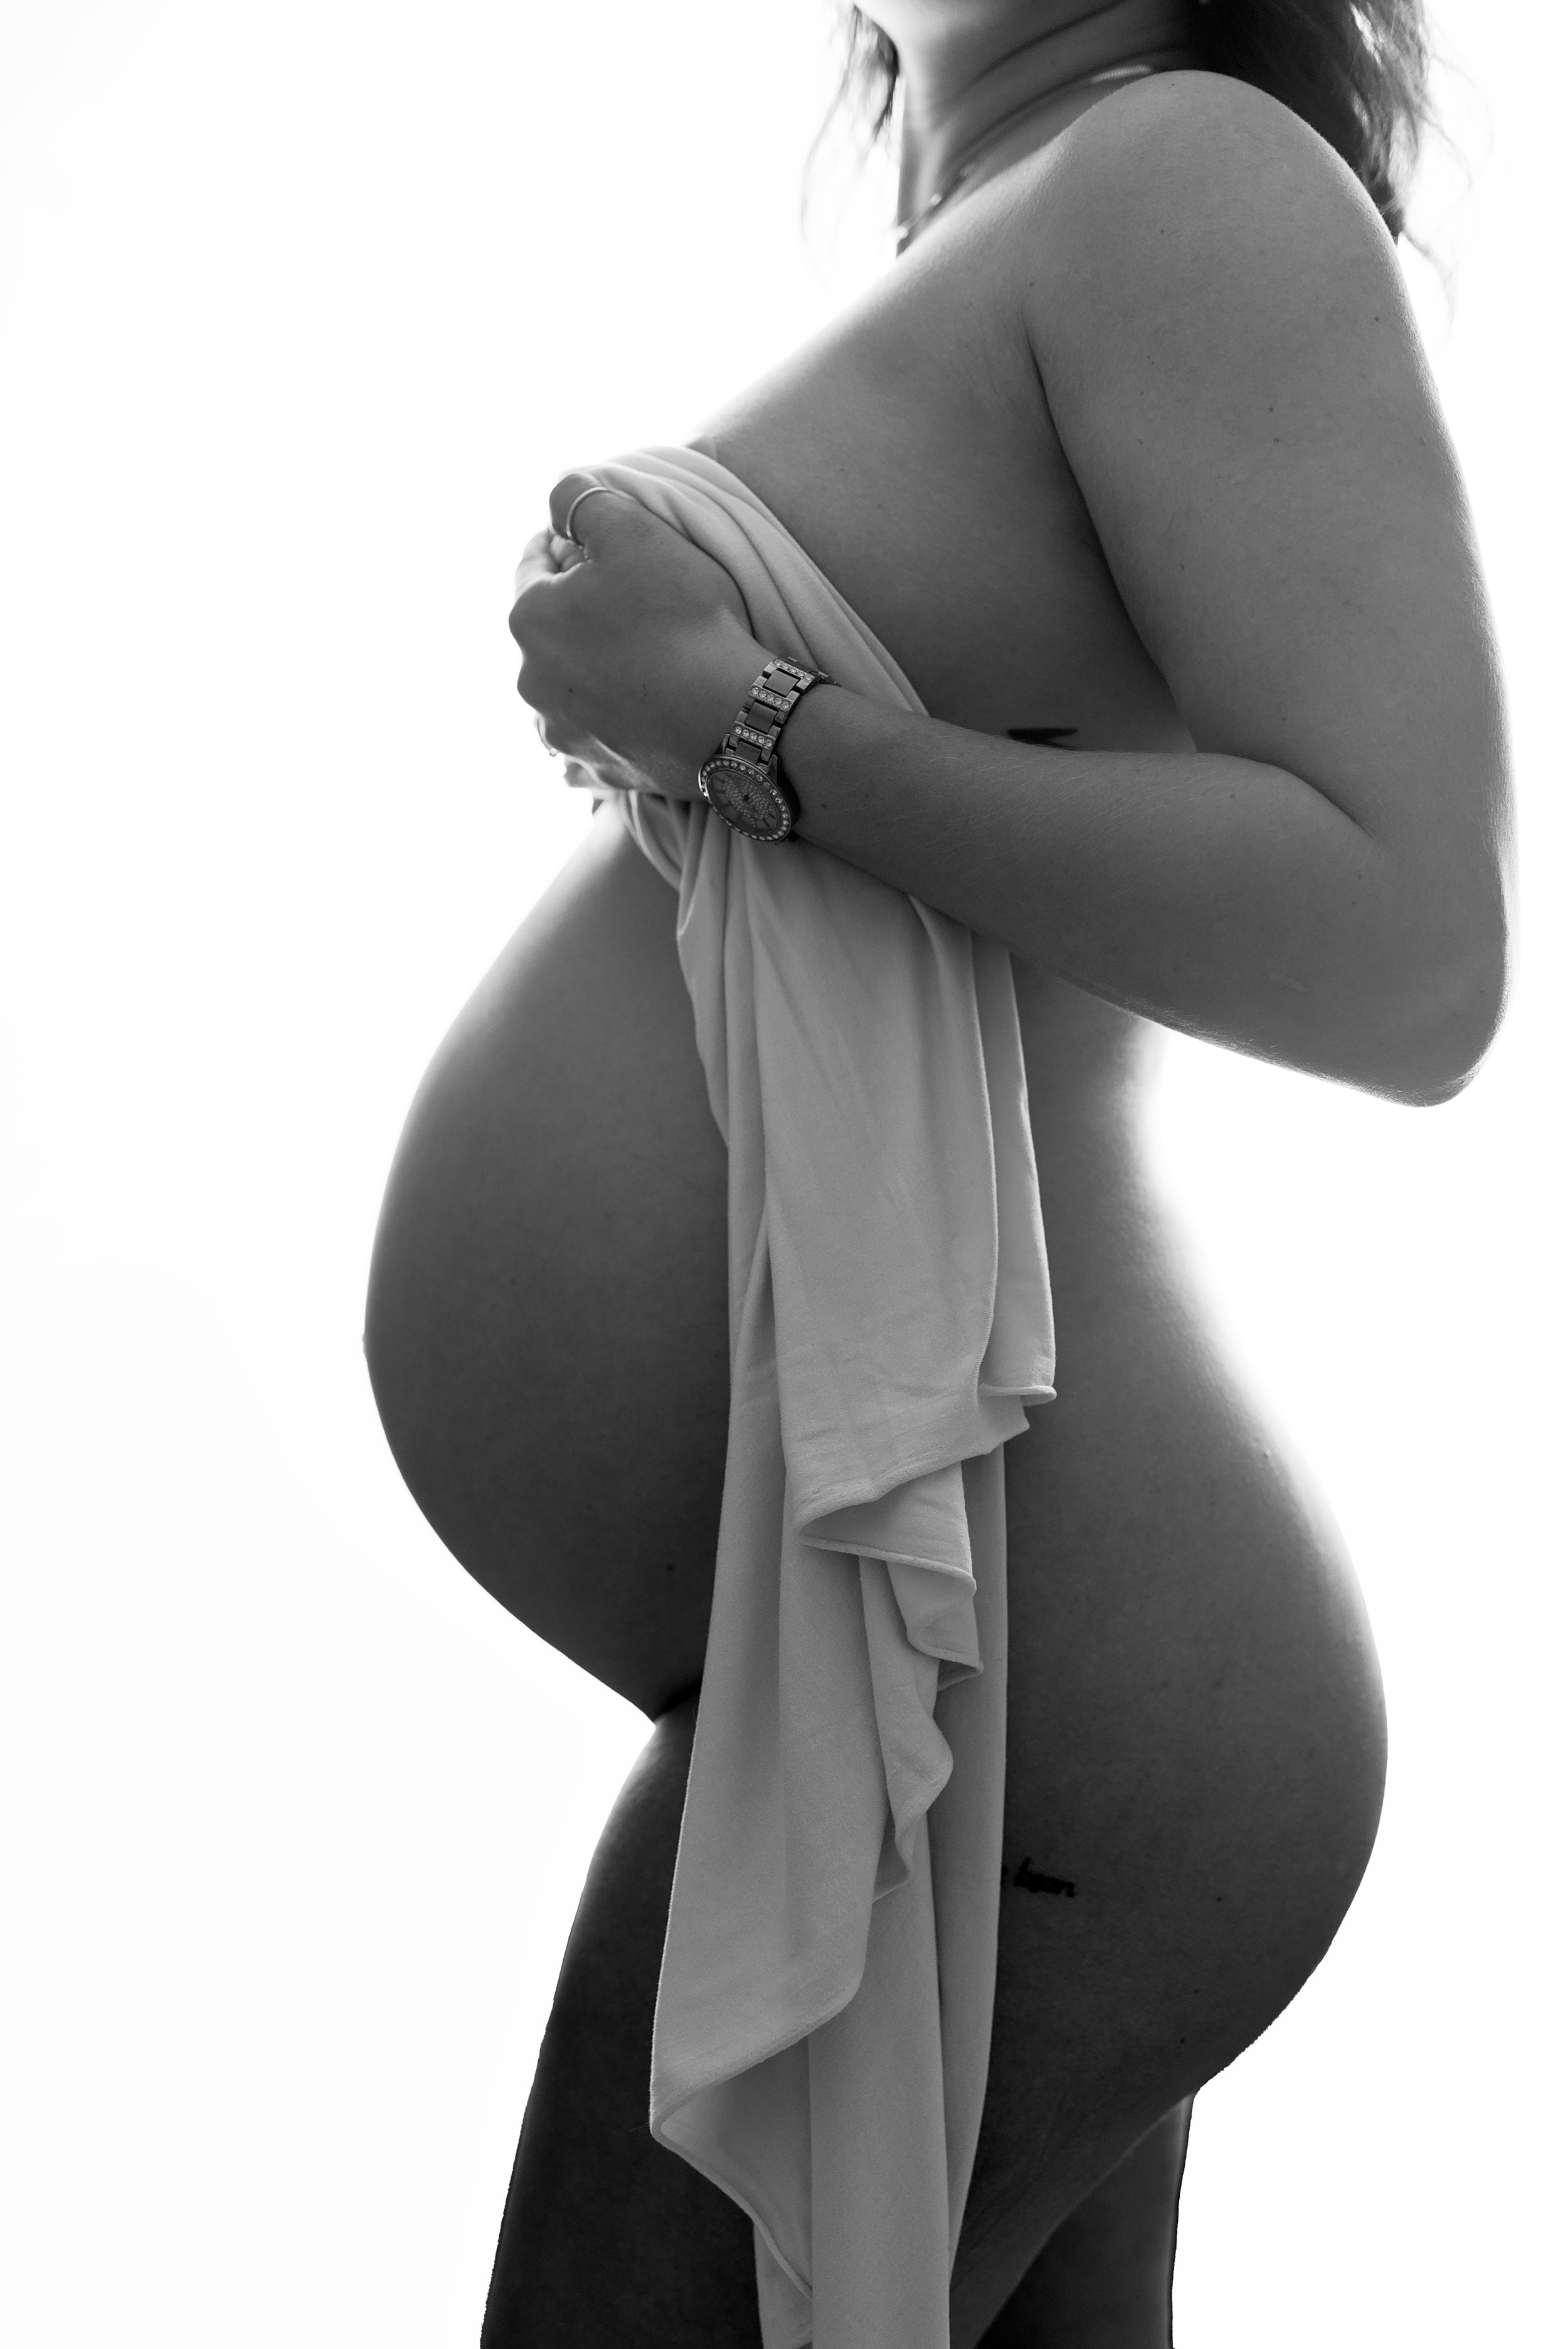 Ripley WV Maternity Photographer